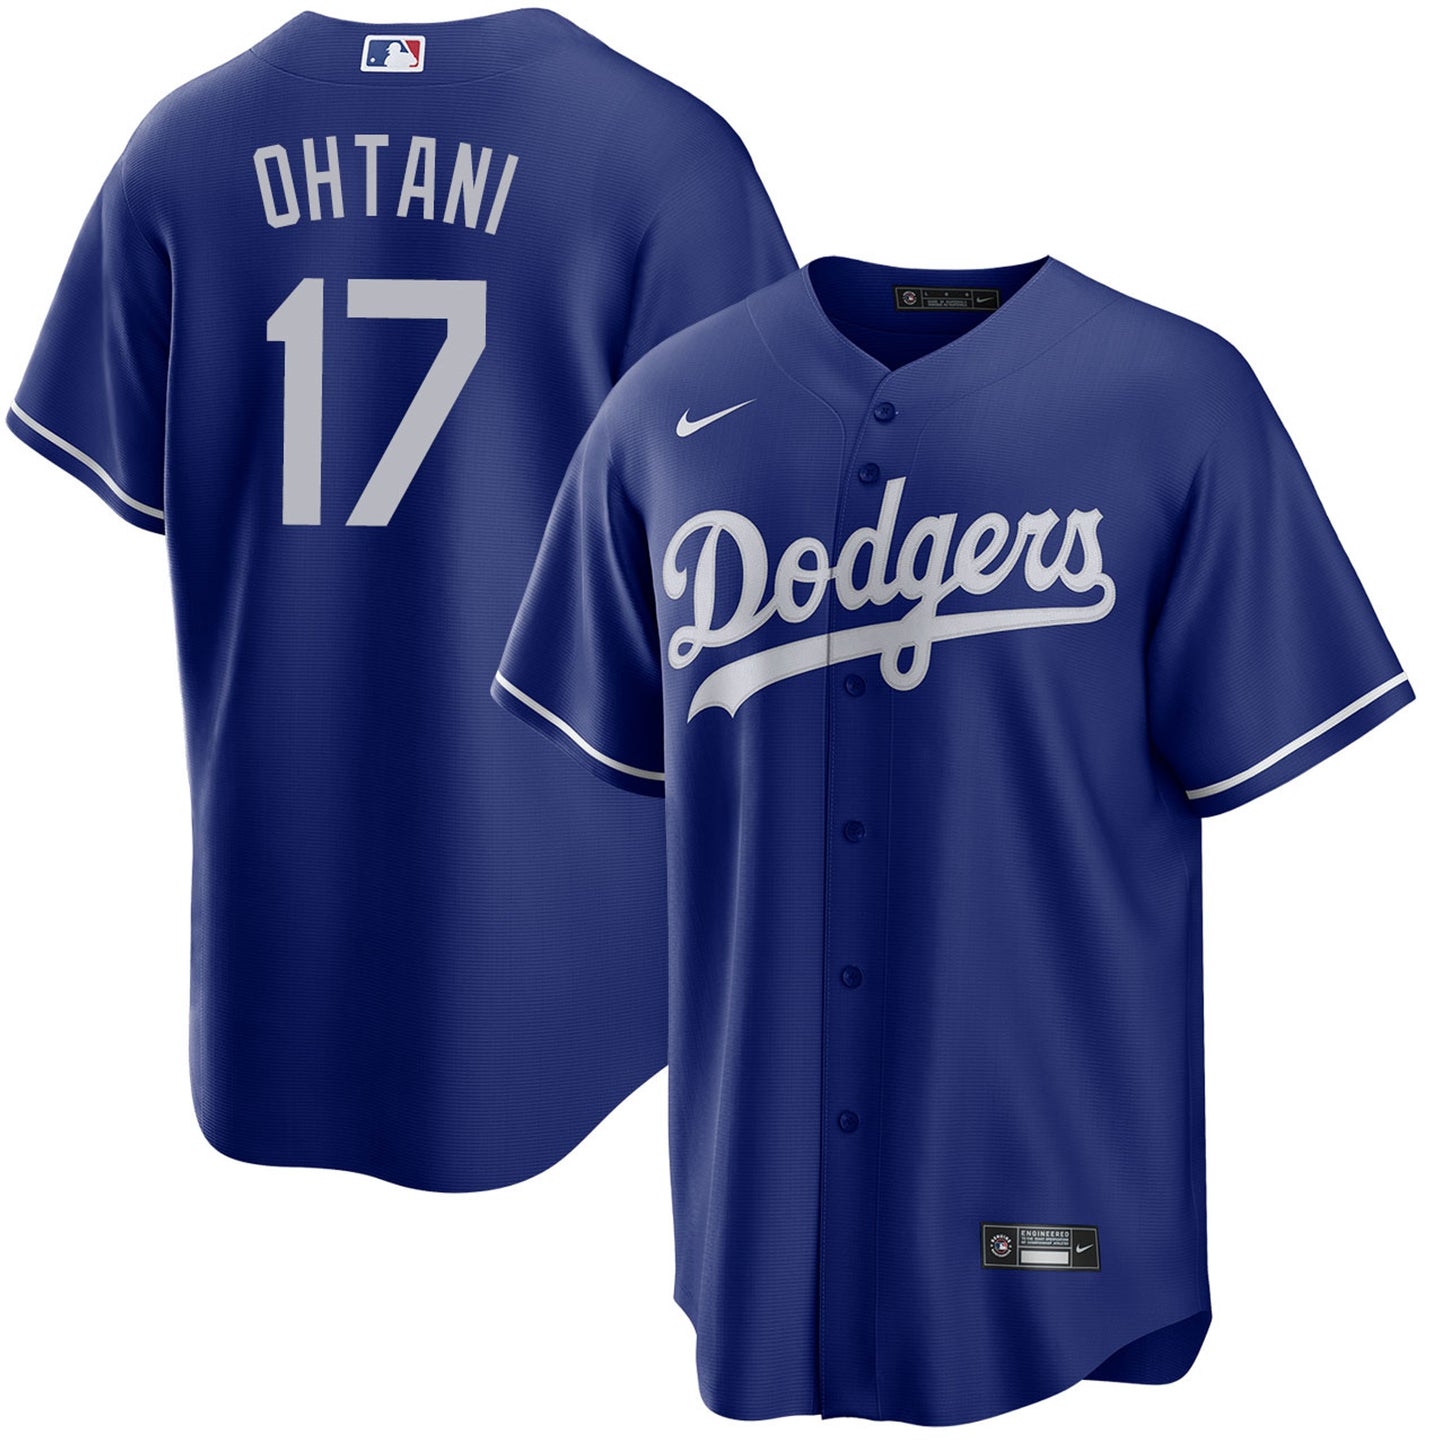 Shohei Ohtani Los Angeles Dodgers Player Jersey